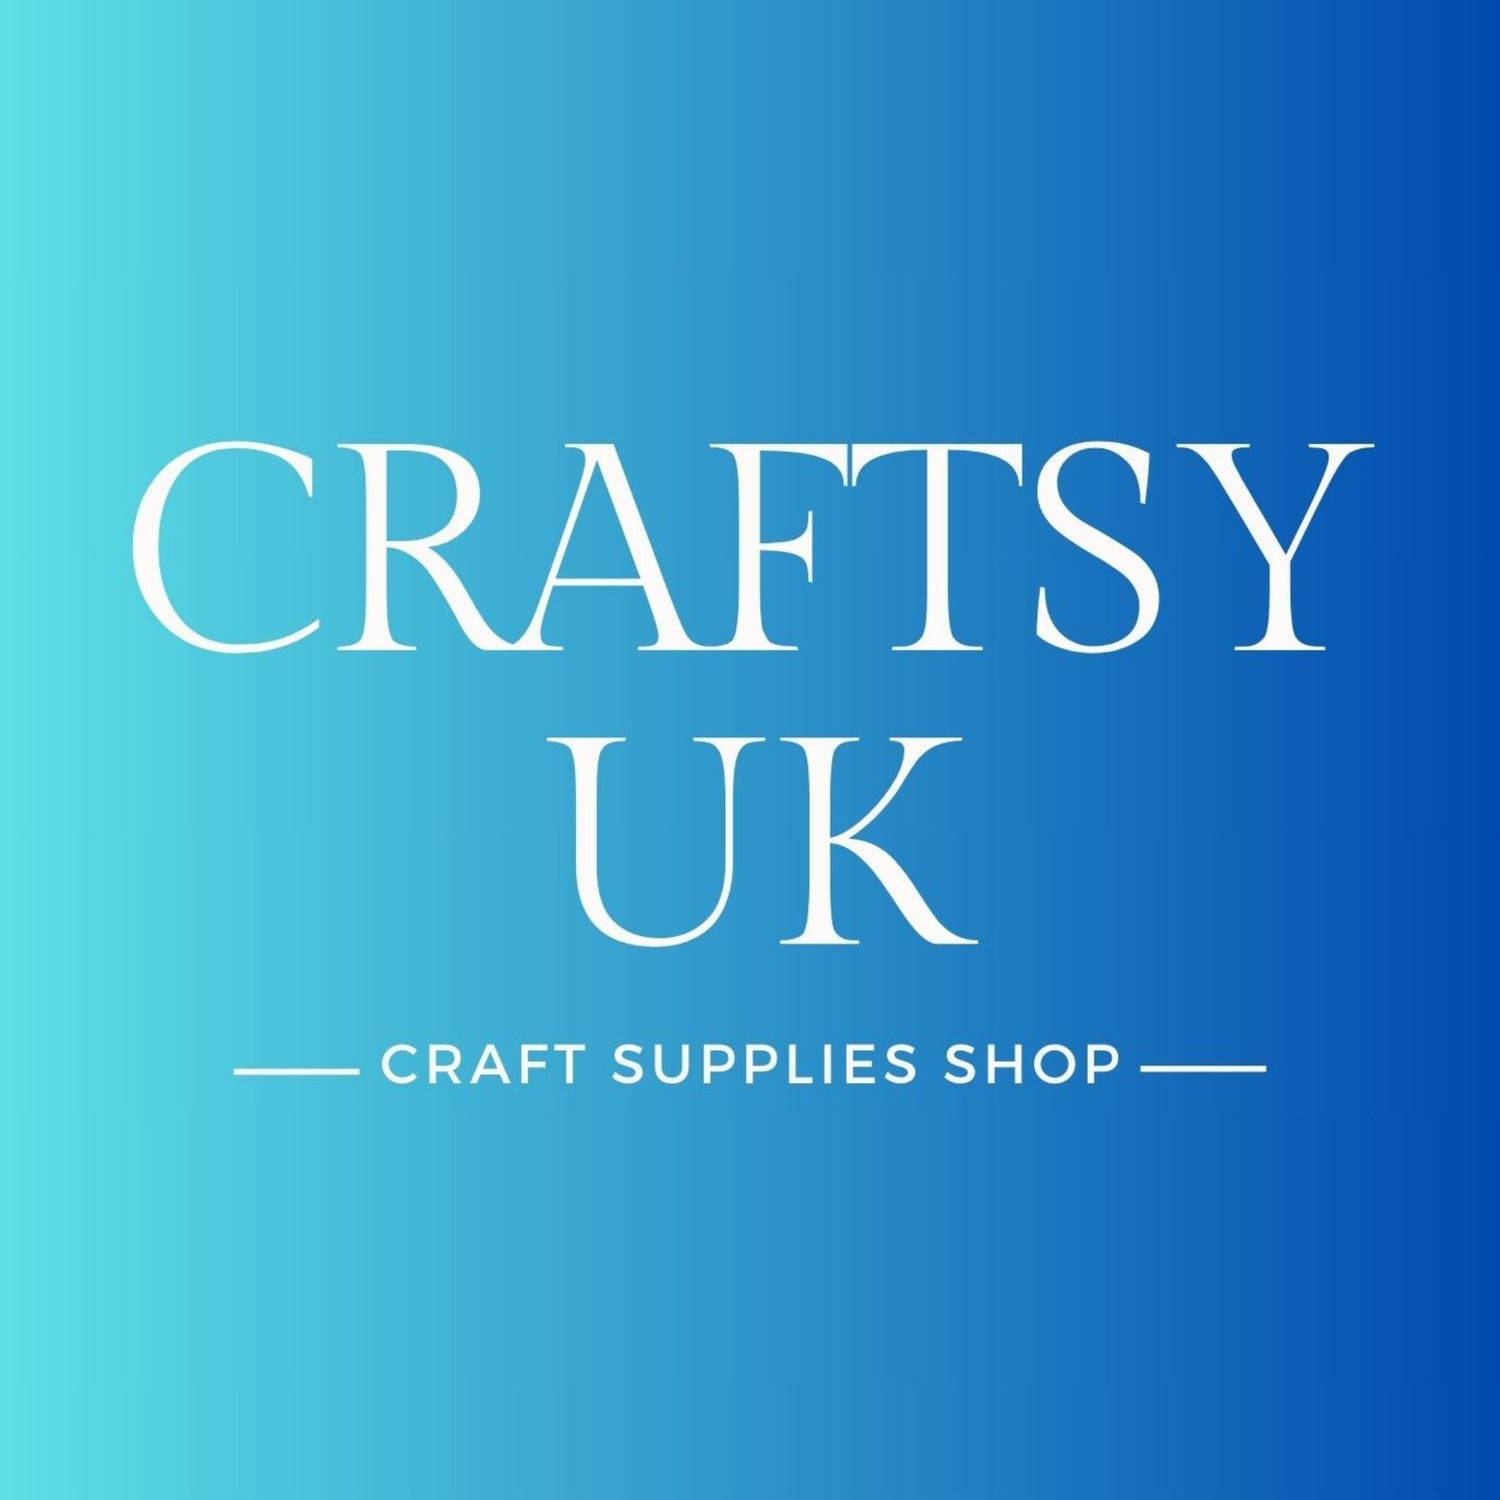 craftsy uk craft supplies shop